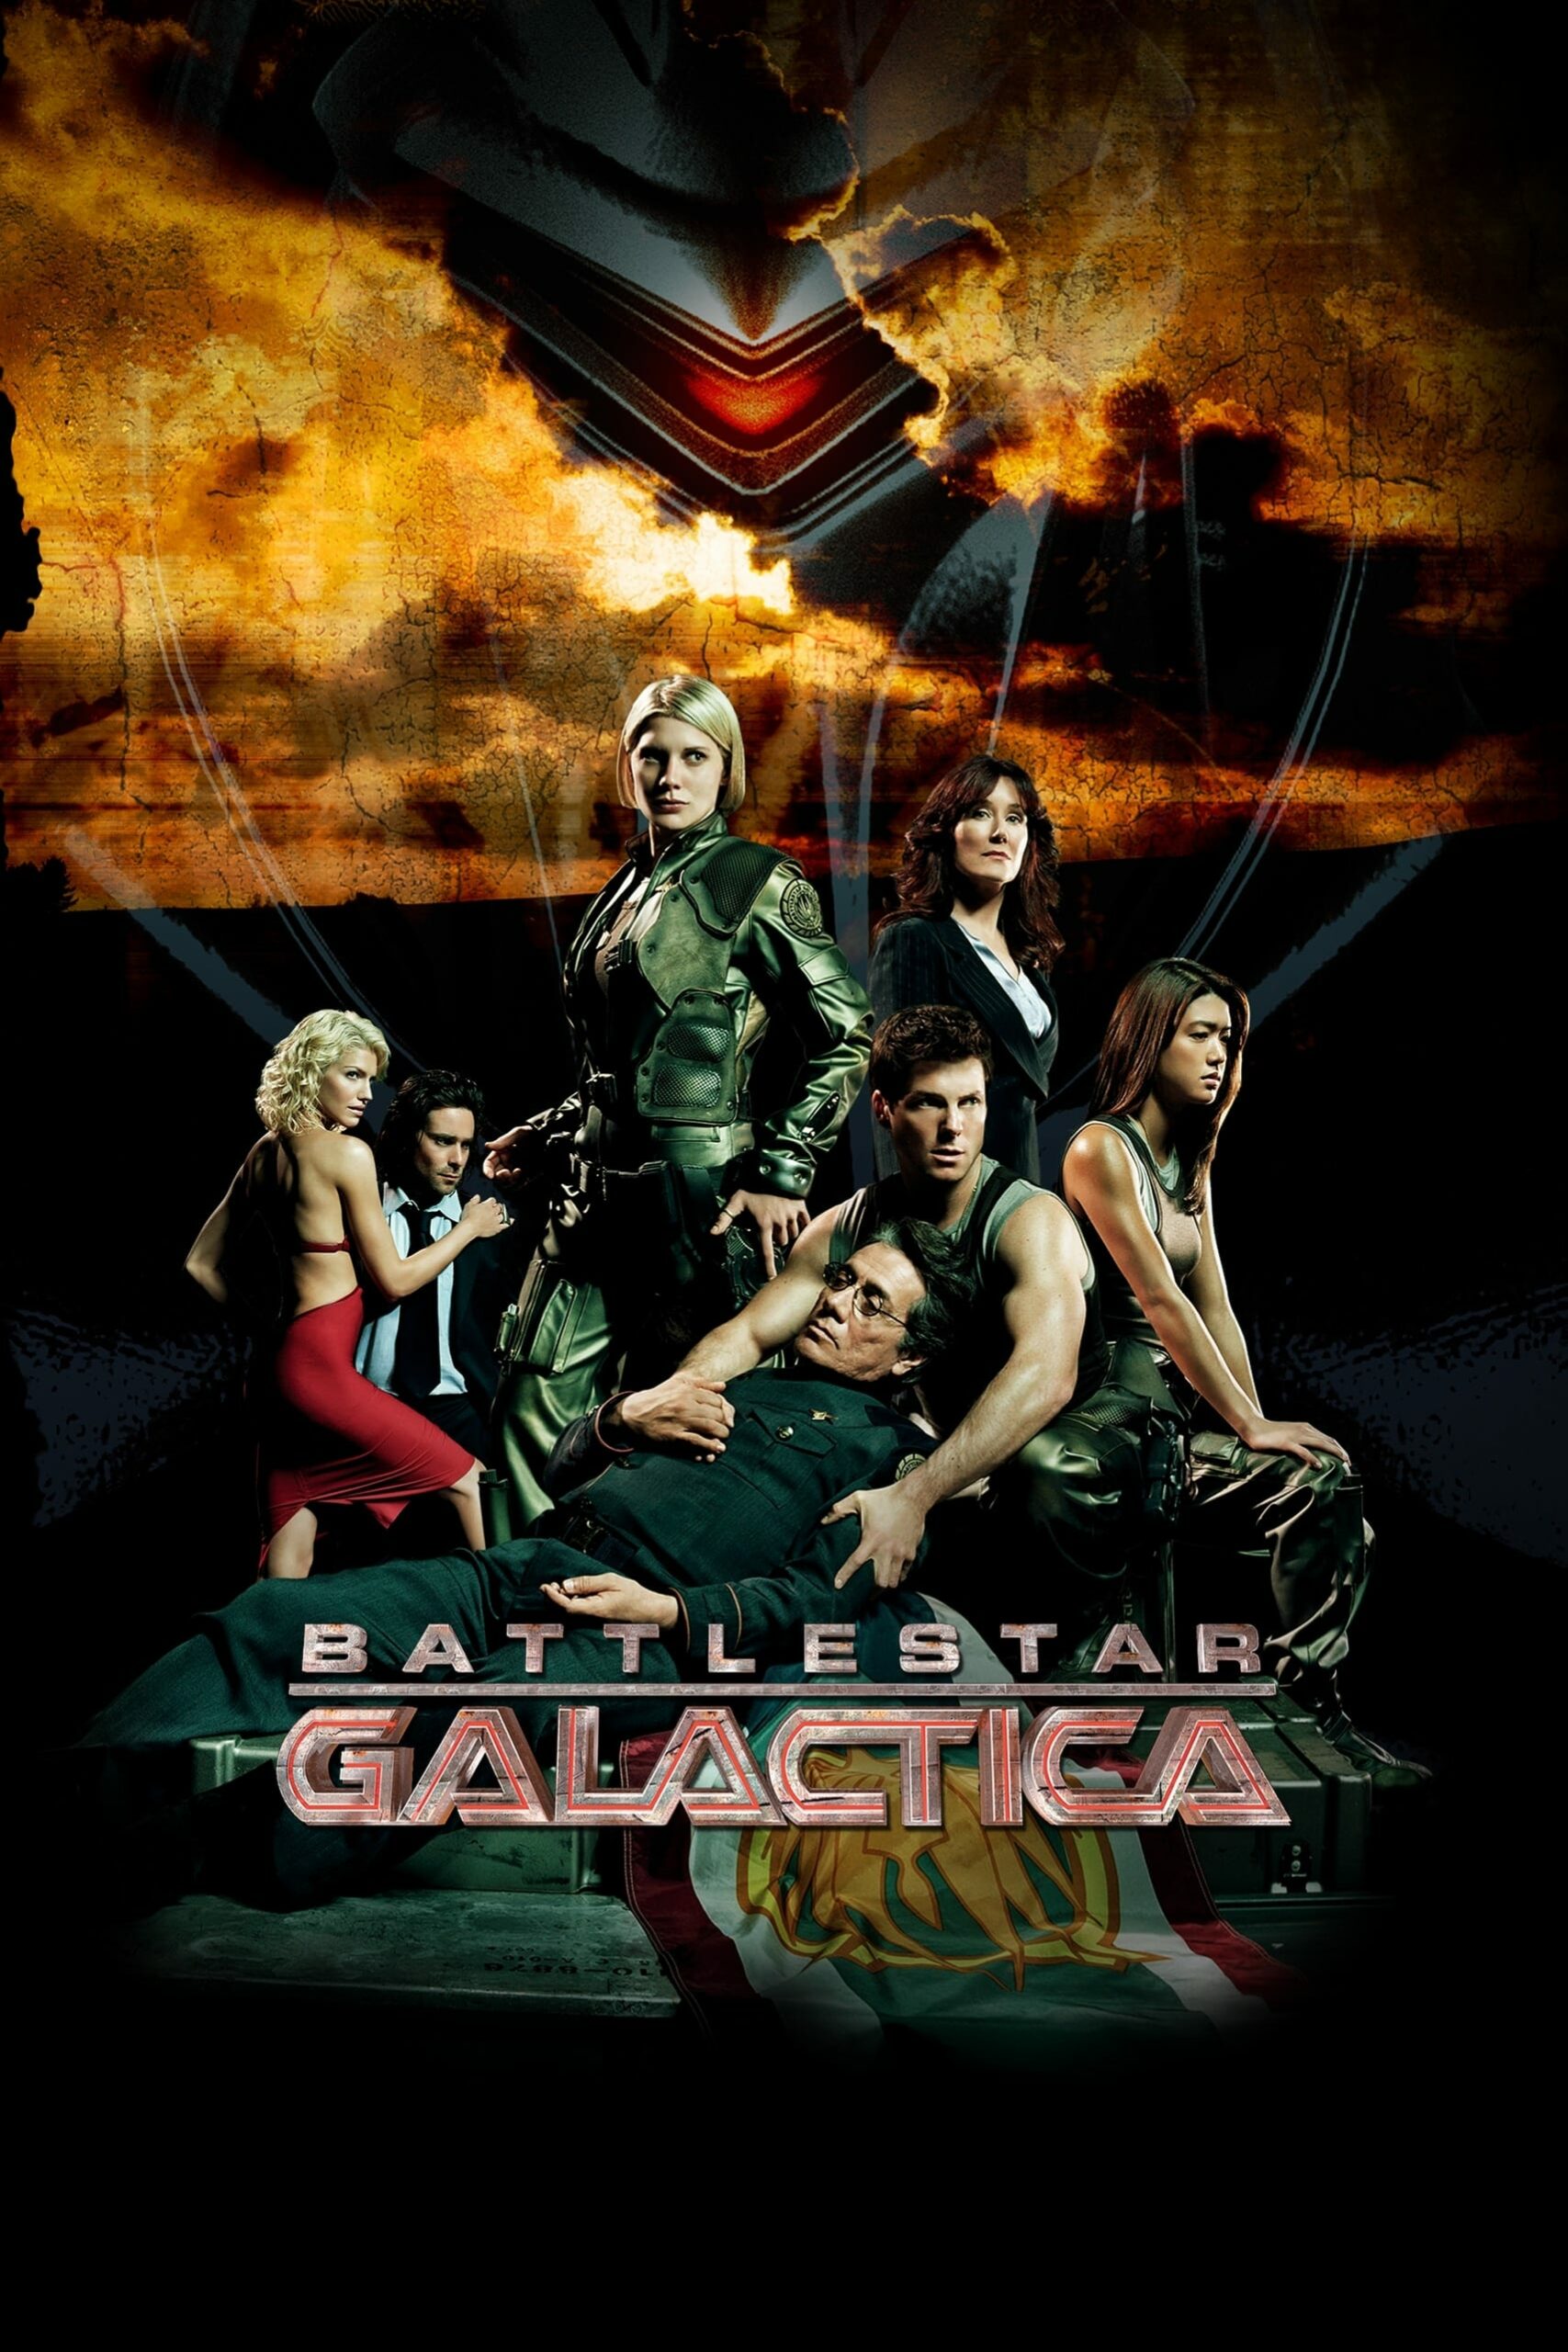 Plakát pro film “Battlestar Galactica”